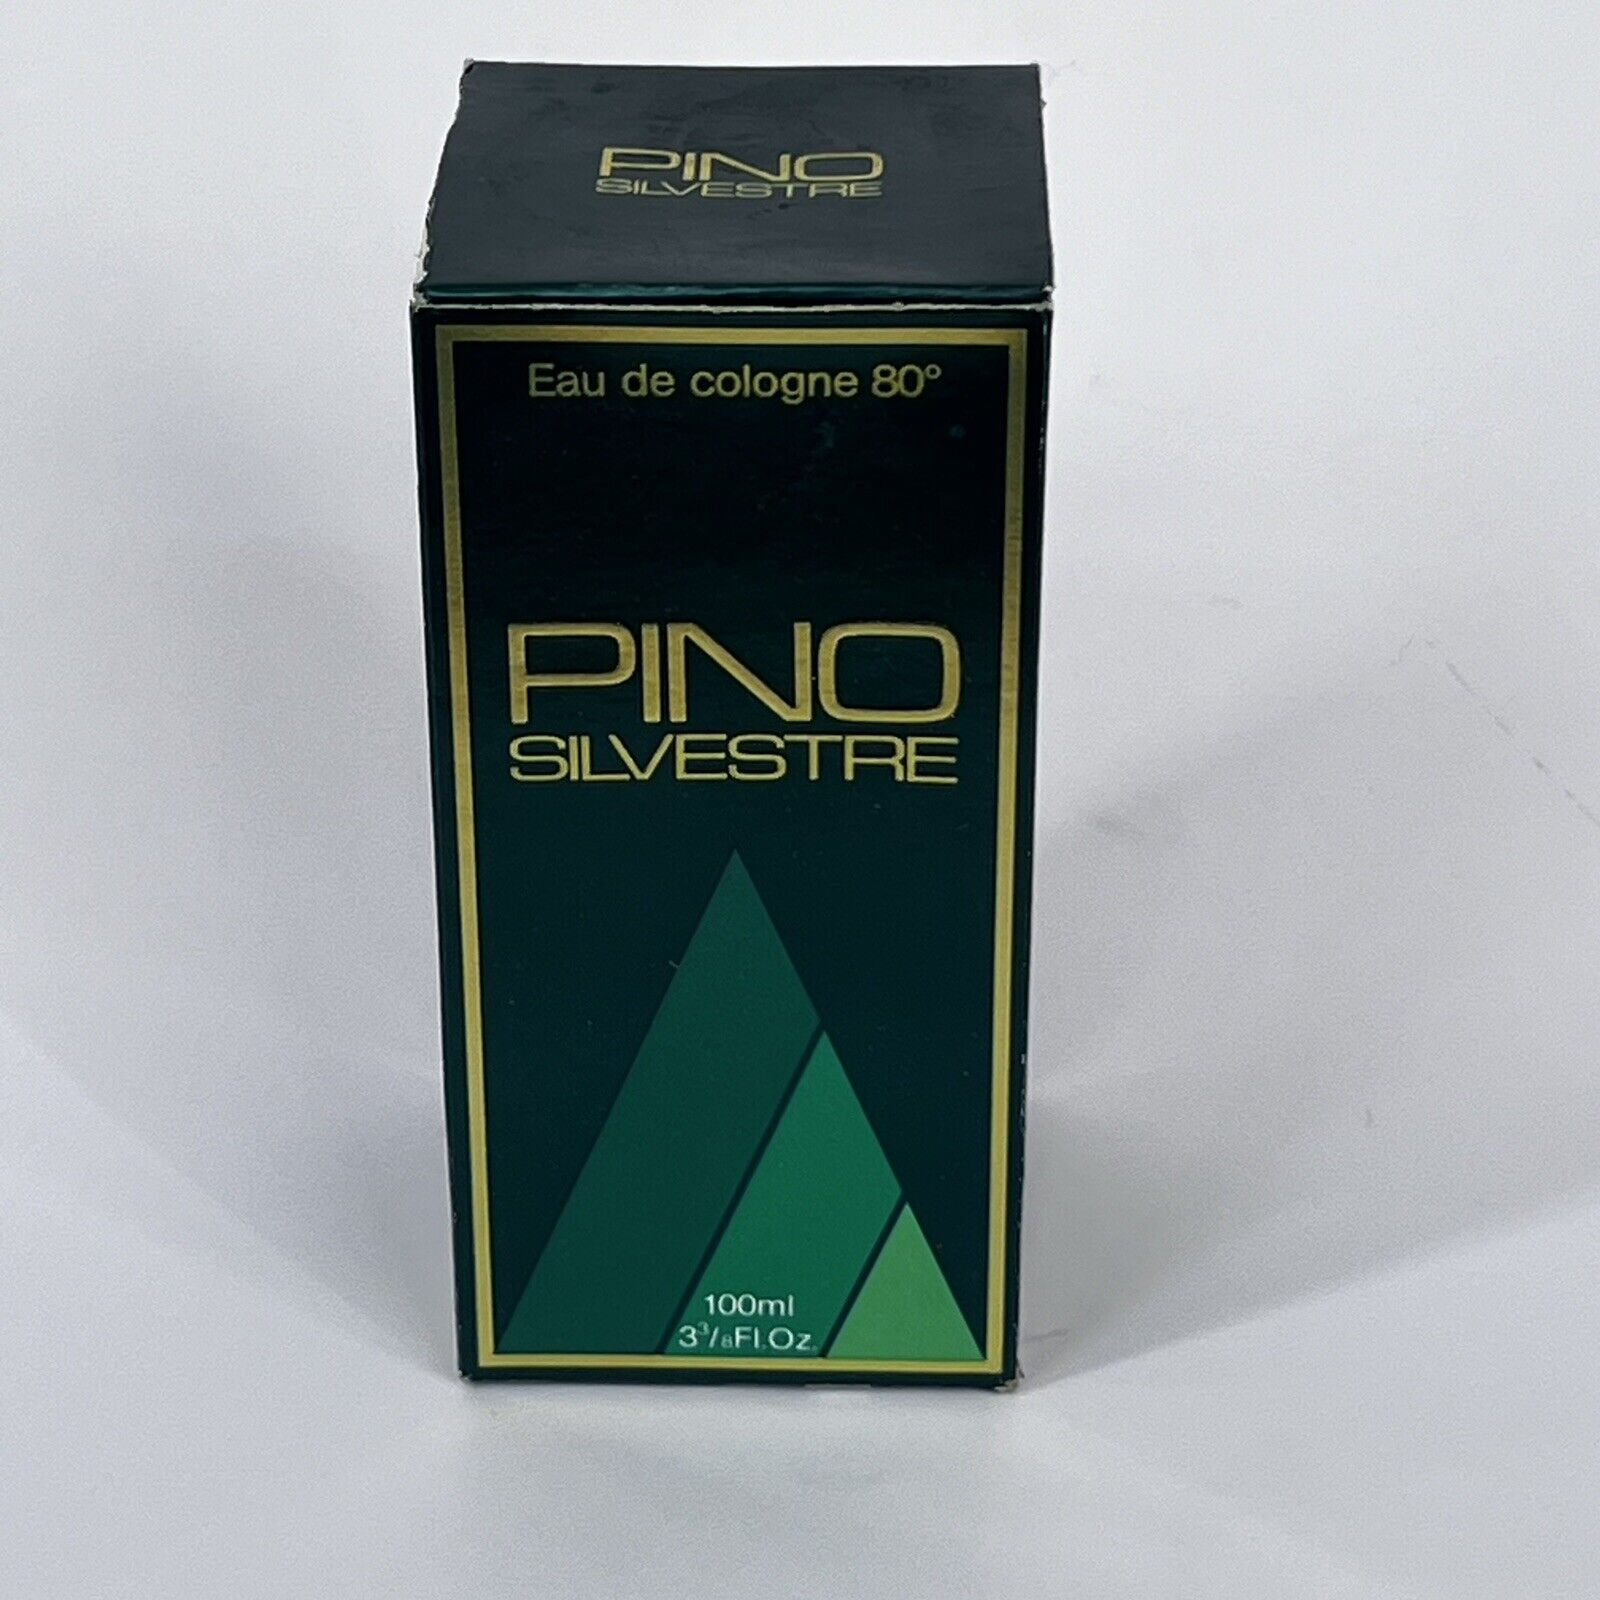 Vintage Vidal Pino Silvestre Eau de cologne 80 - 100 ml Made In Italy